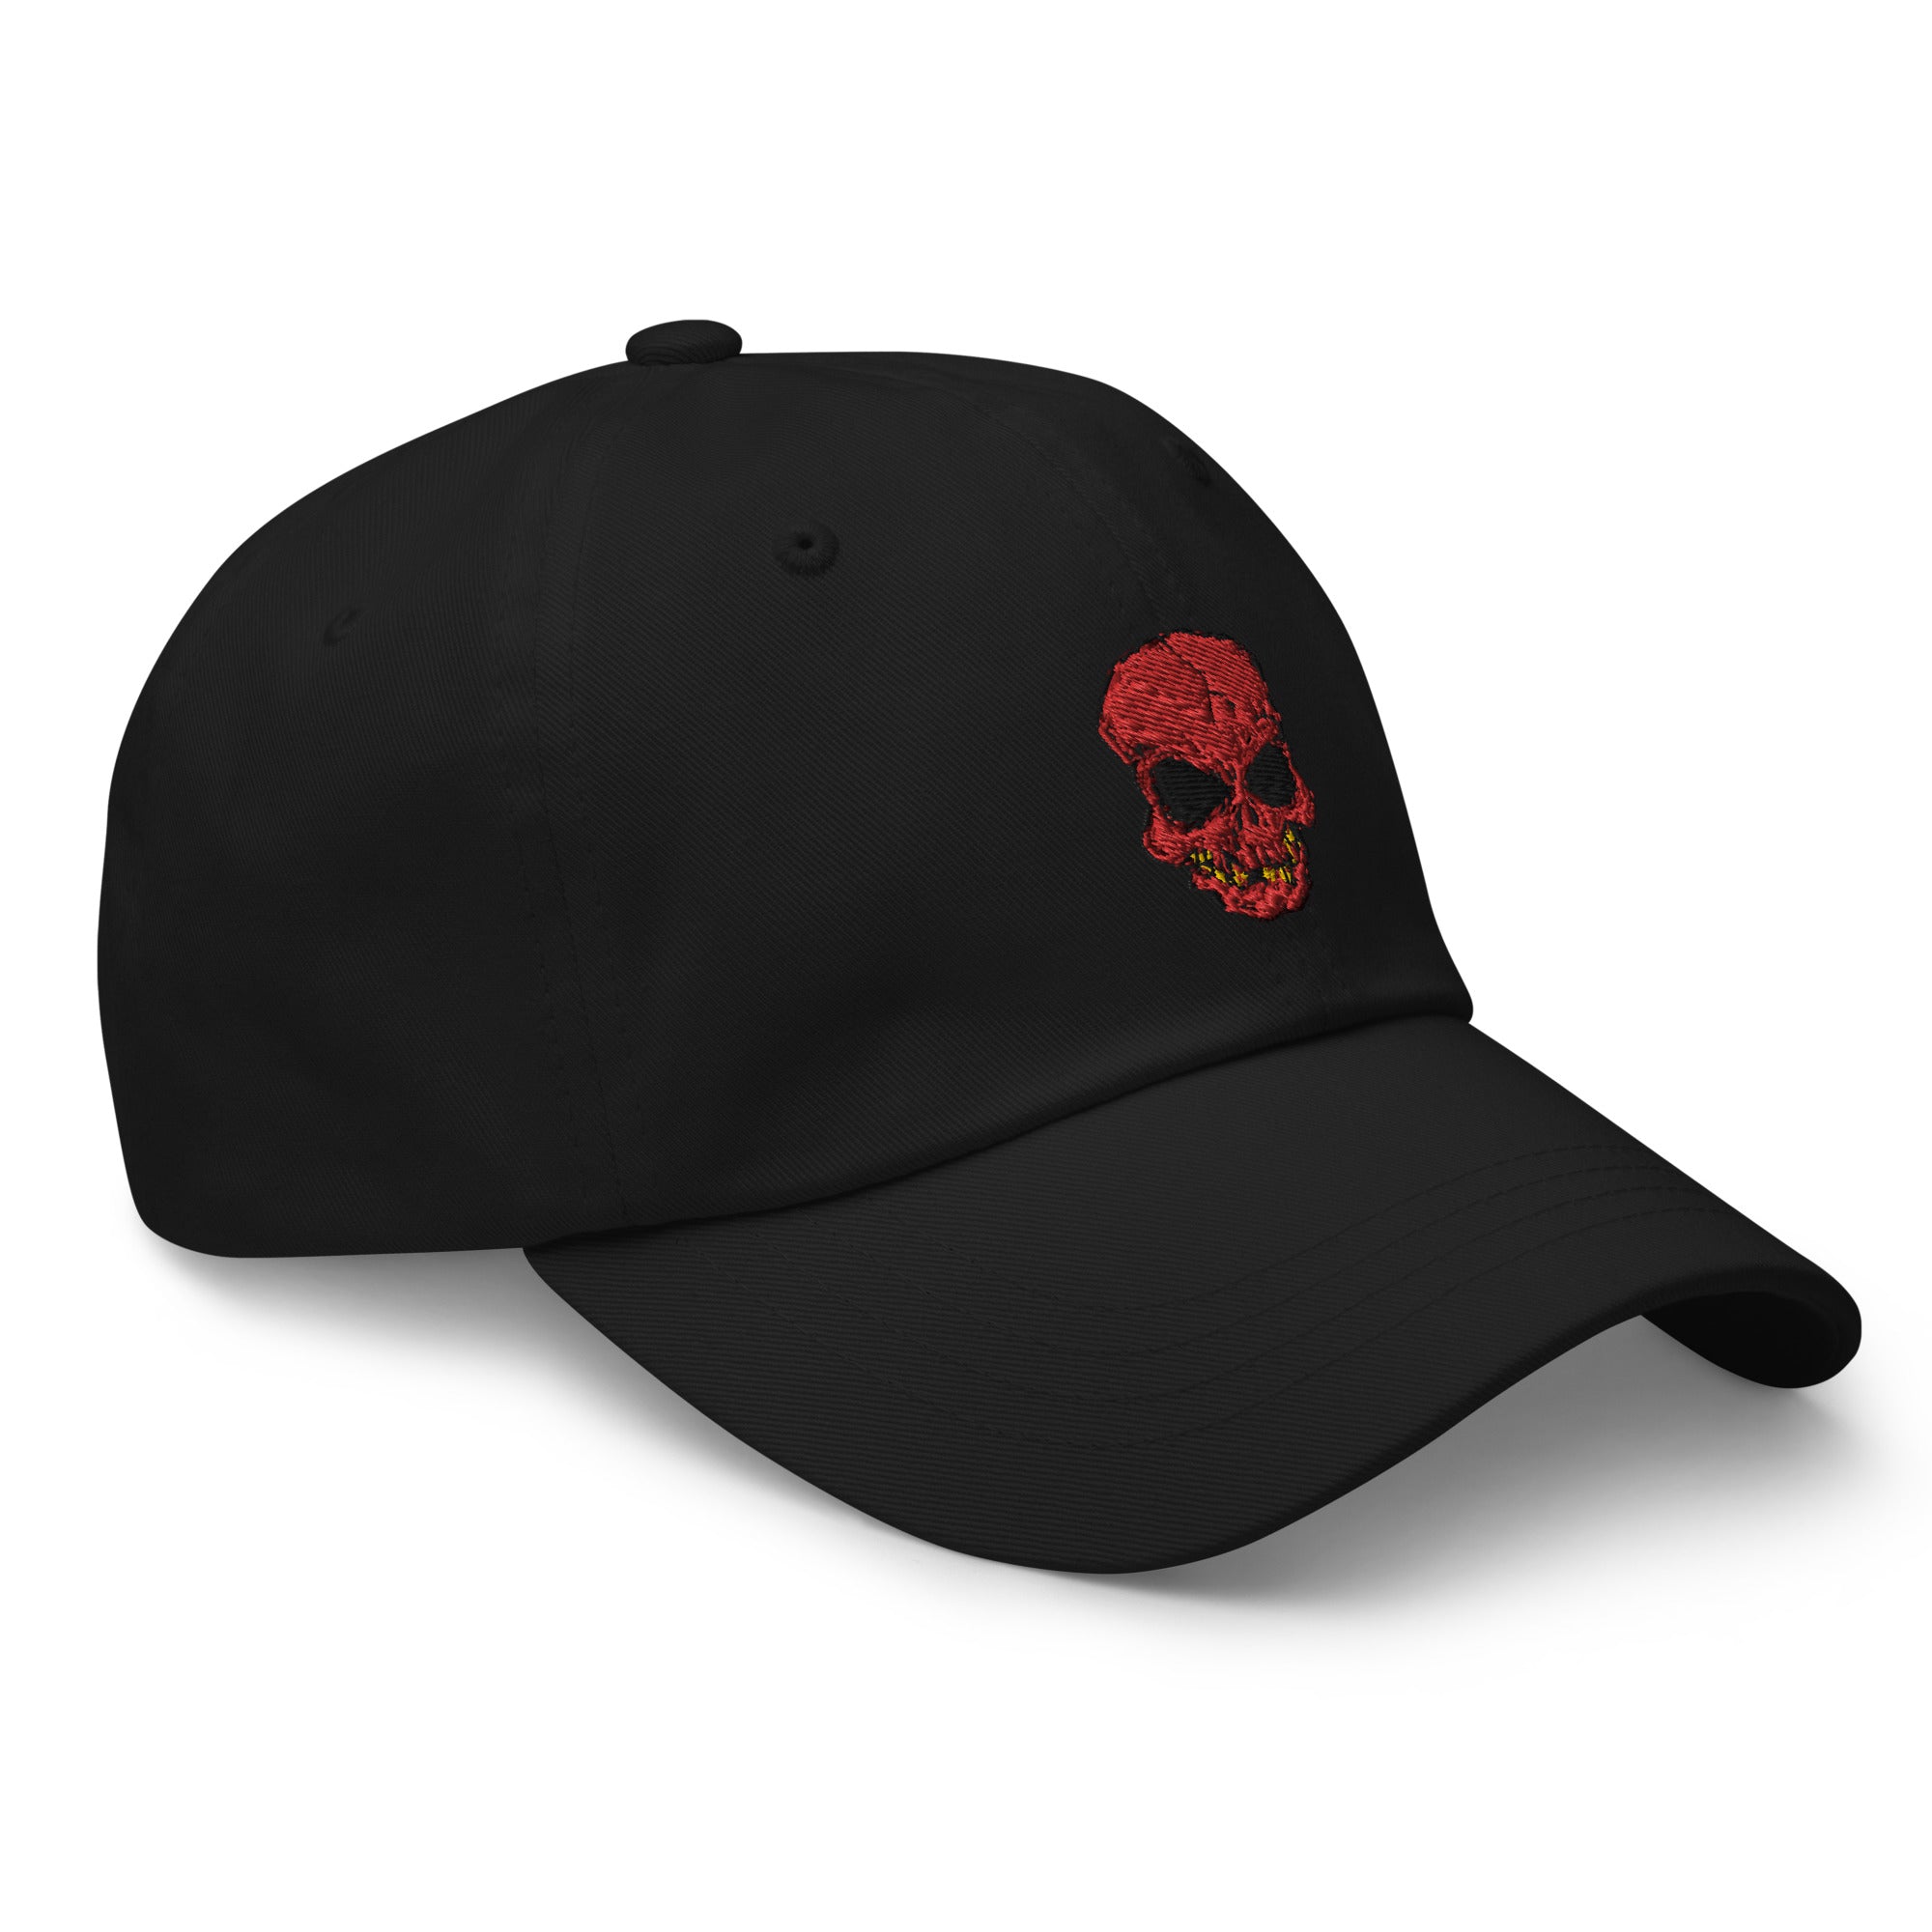 Broken Creepy Skull Embroidered Baseball Cap Dad hat - Edge of Life Designs